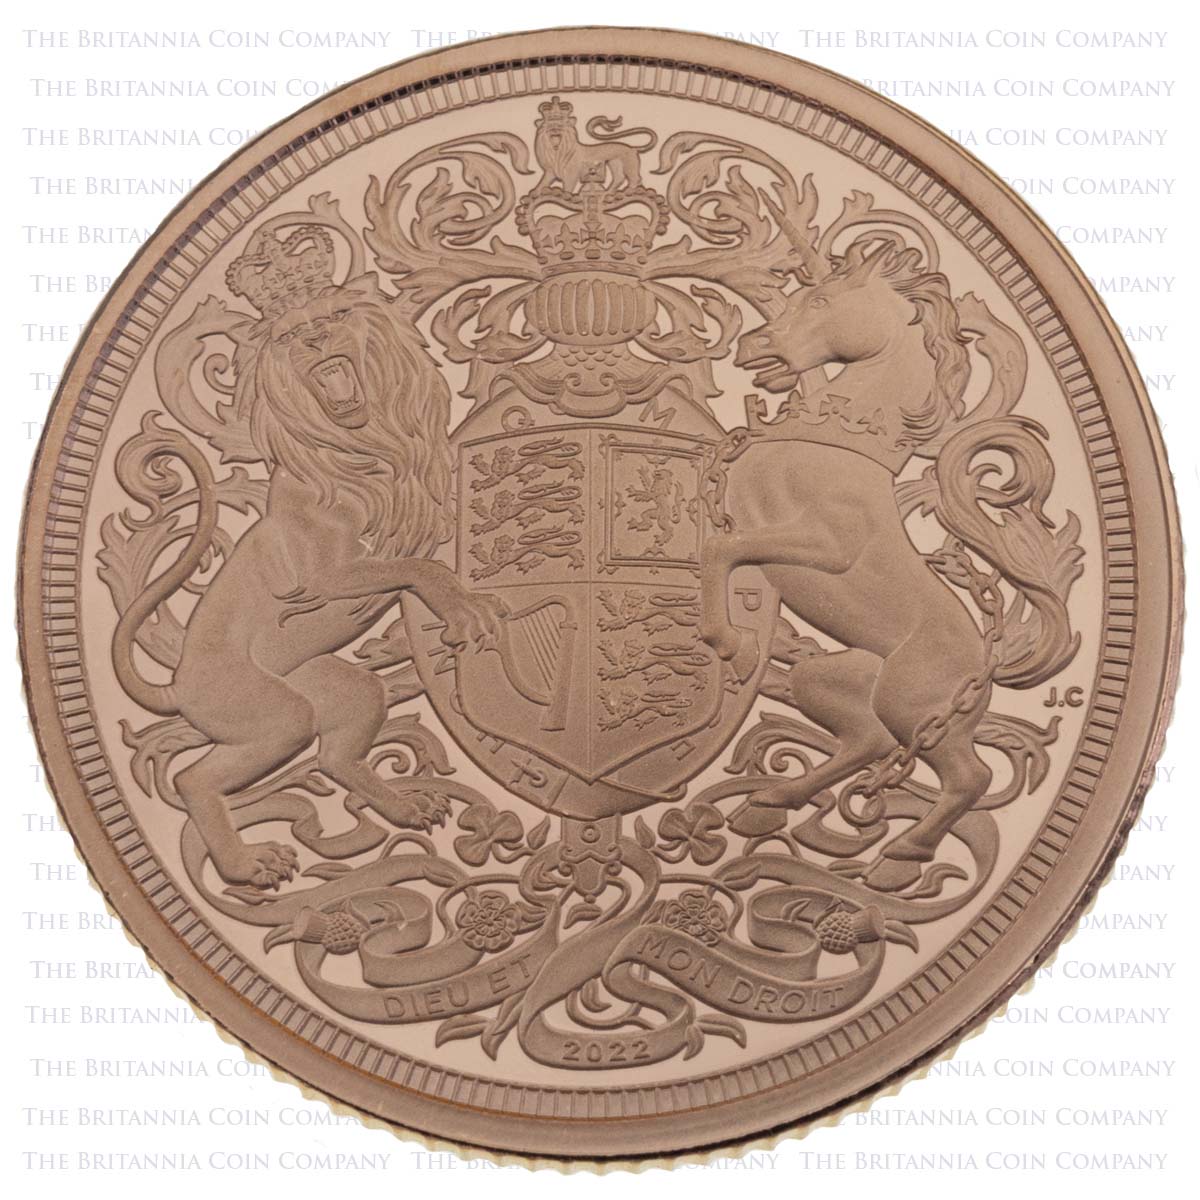 MSVH22 2022 Charles III Gold Proof Half Sovereign Queen Elizabeth II Memorial Coin Reverse